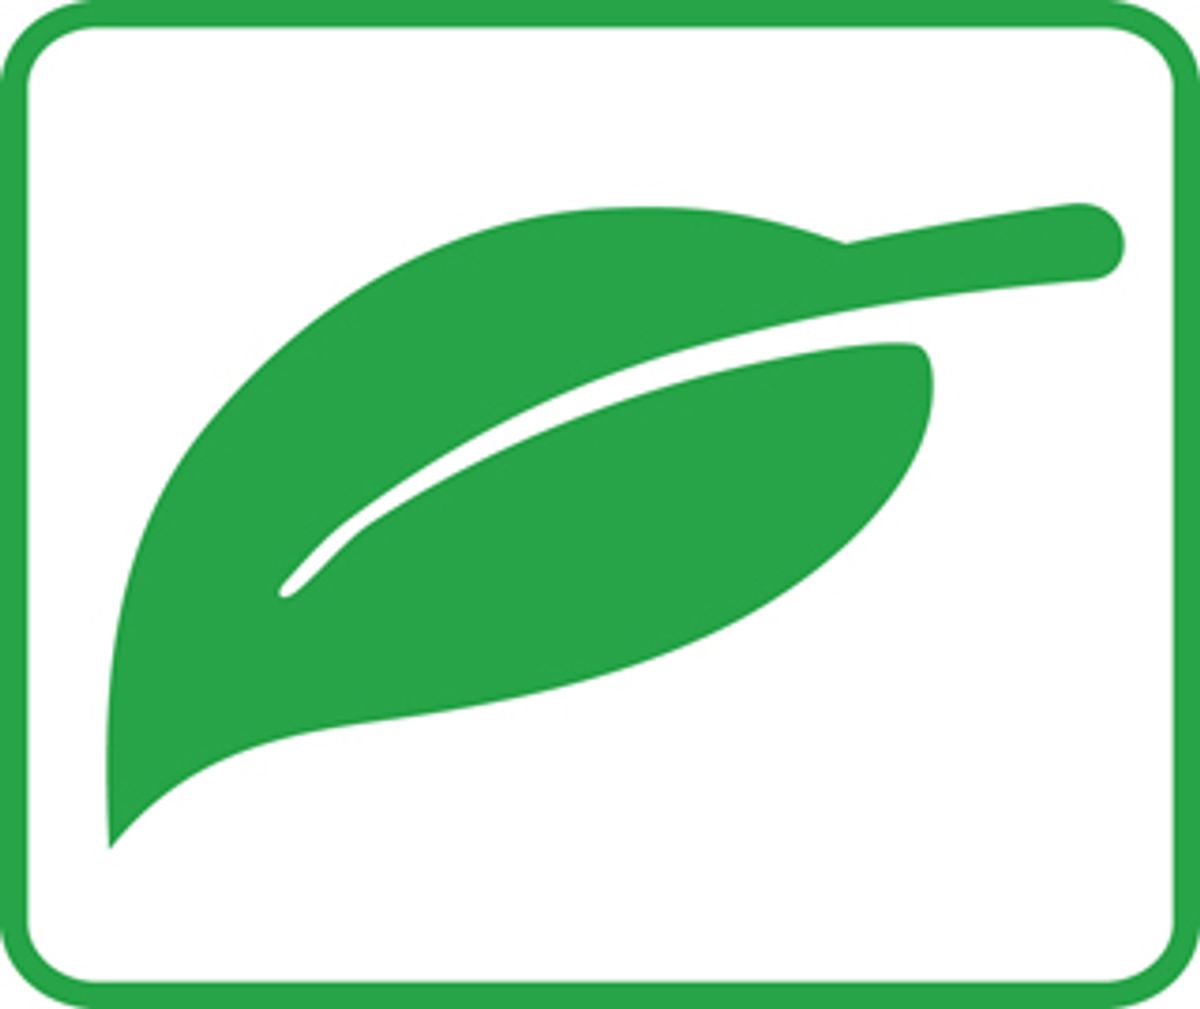 Penske Logistics Given Green Supply Chain Award